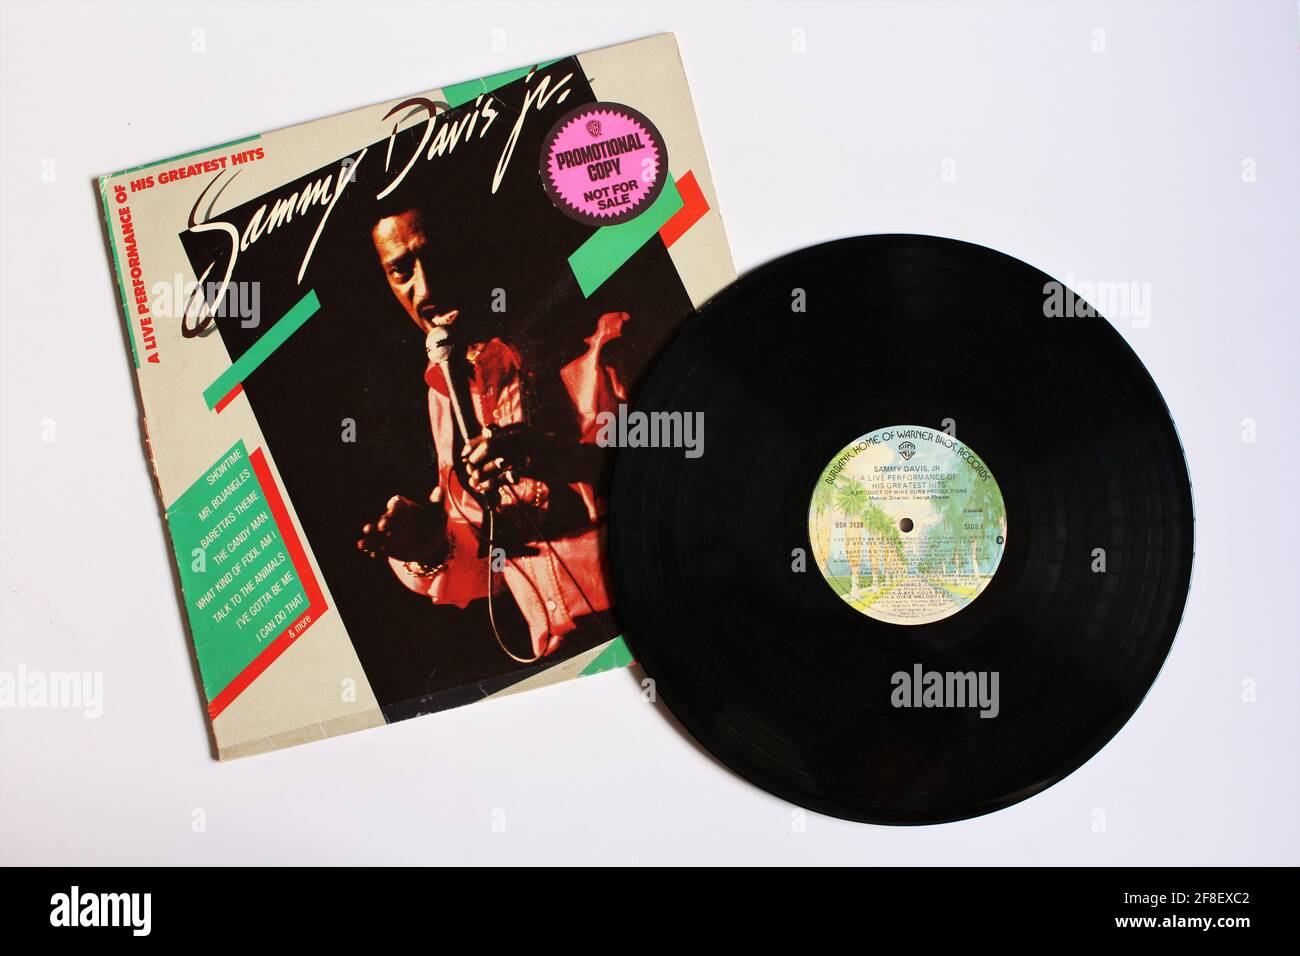 Jazz, easy listening, blues, pop & show tunes artist Sammy Davis Jr music album on vinyl record LP disc. A Live Performance of His Greatest Hits Stock Photo